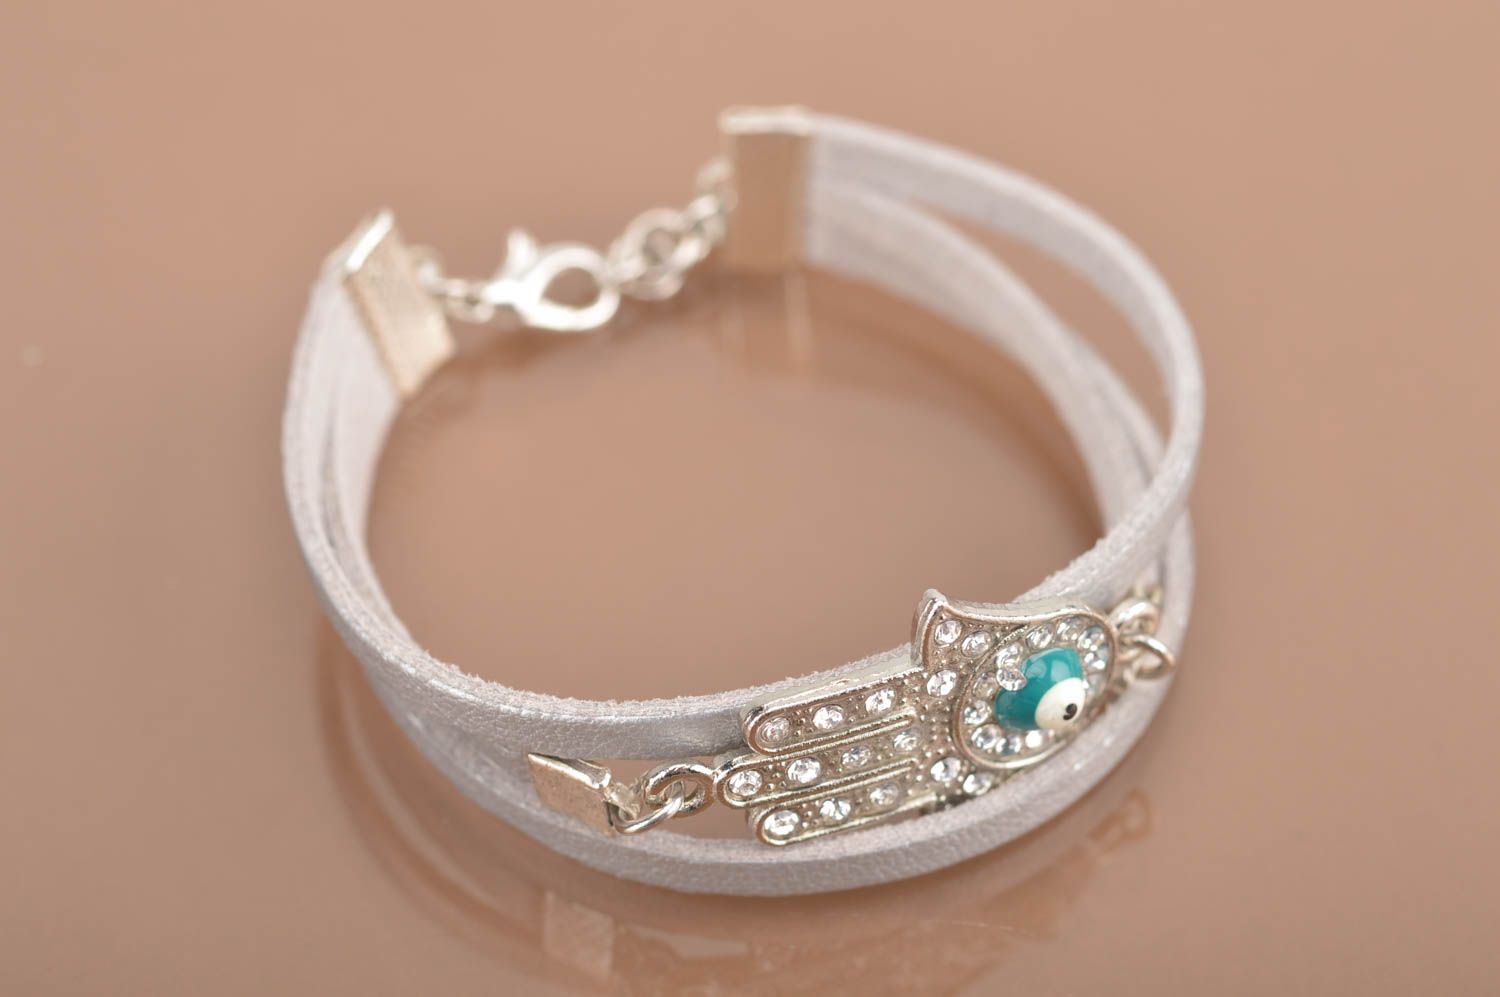 Unusual handmade suede cord bracelet unisex bracelet designs fashion trends photo 4